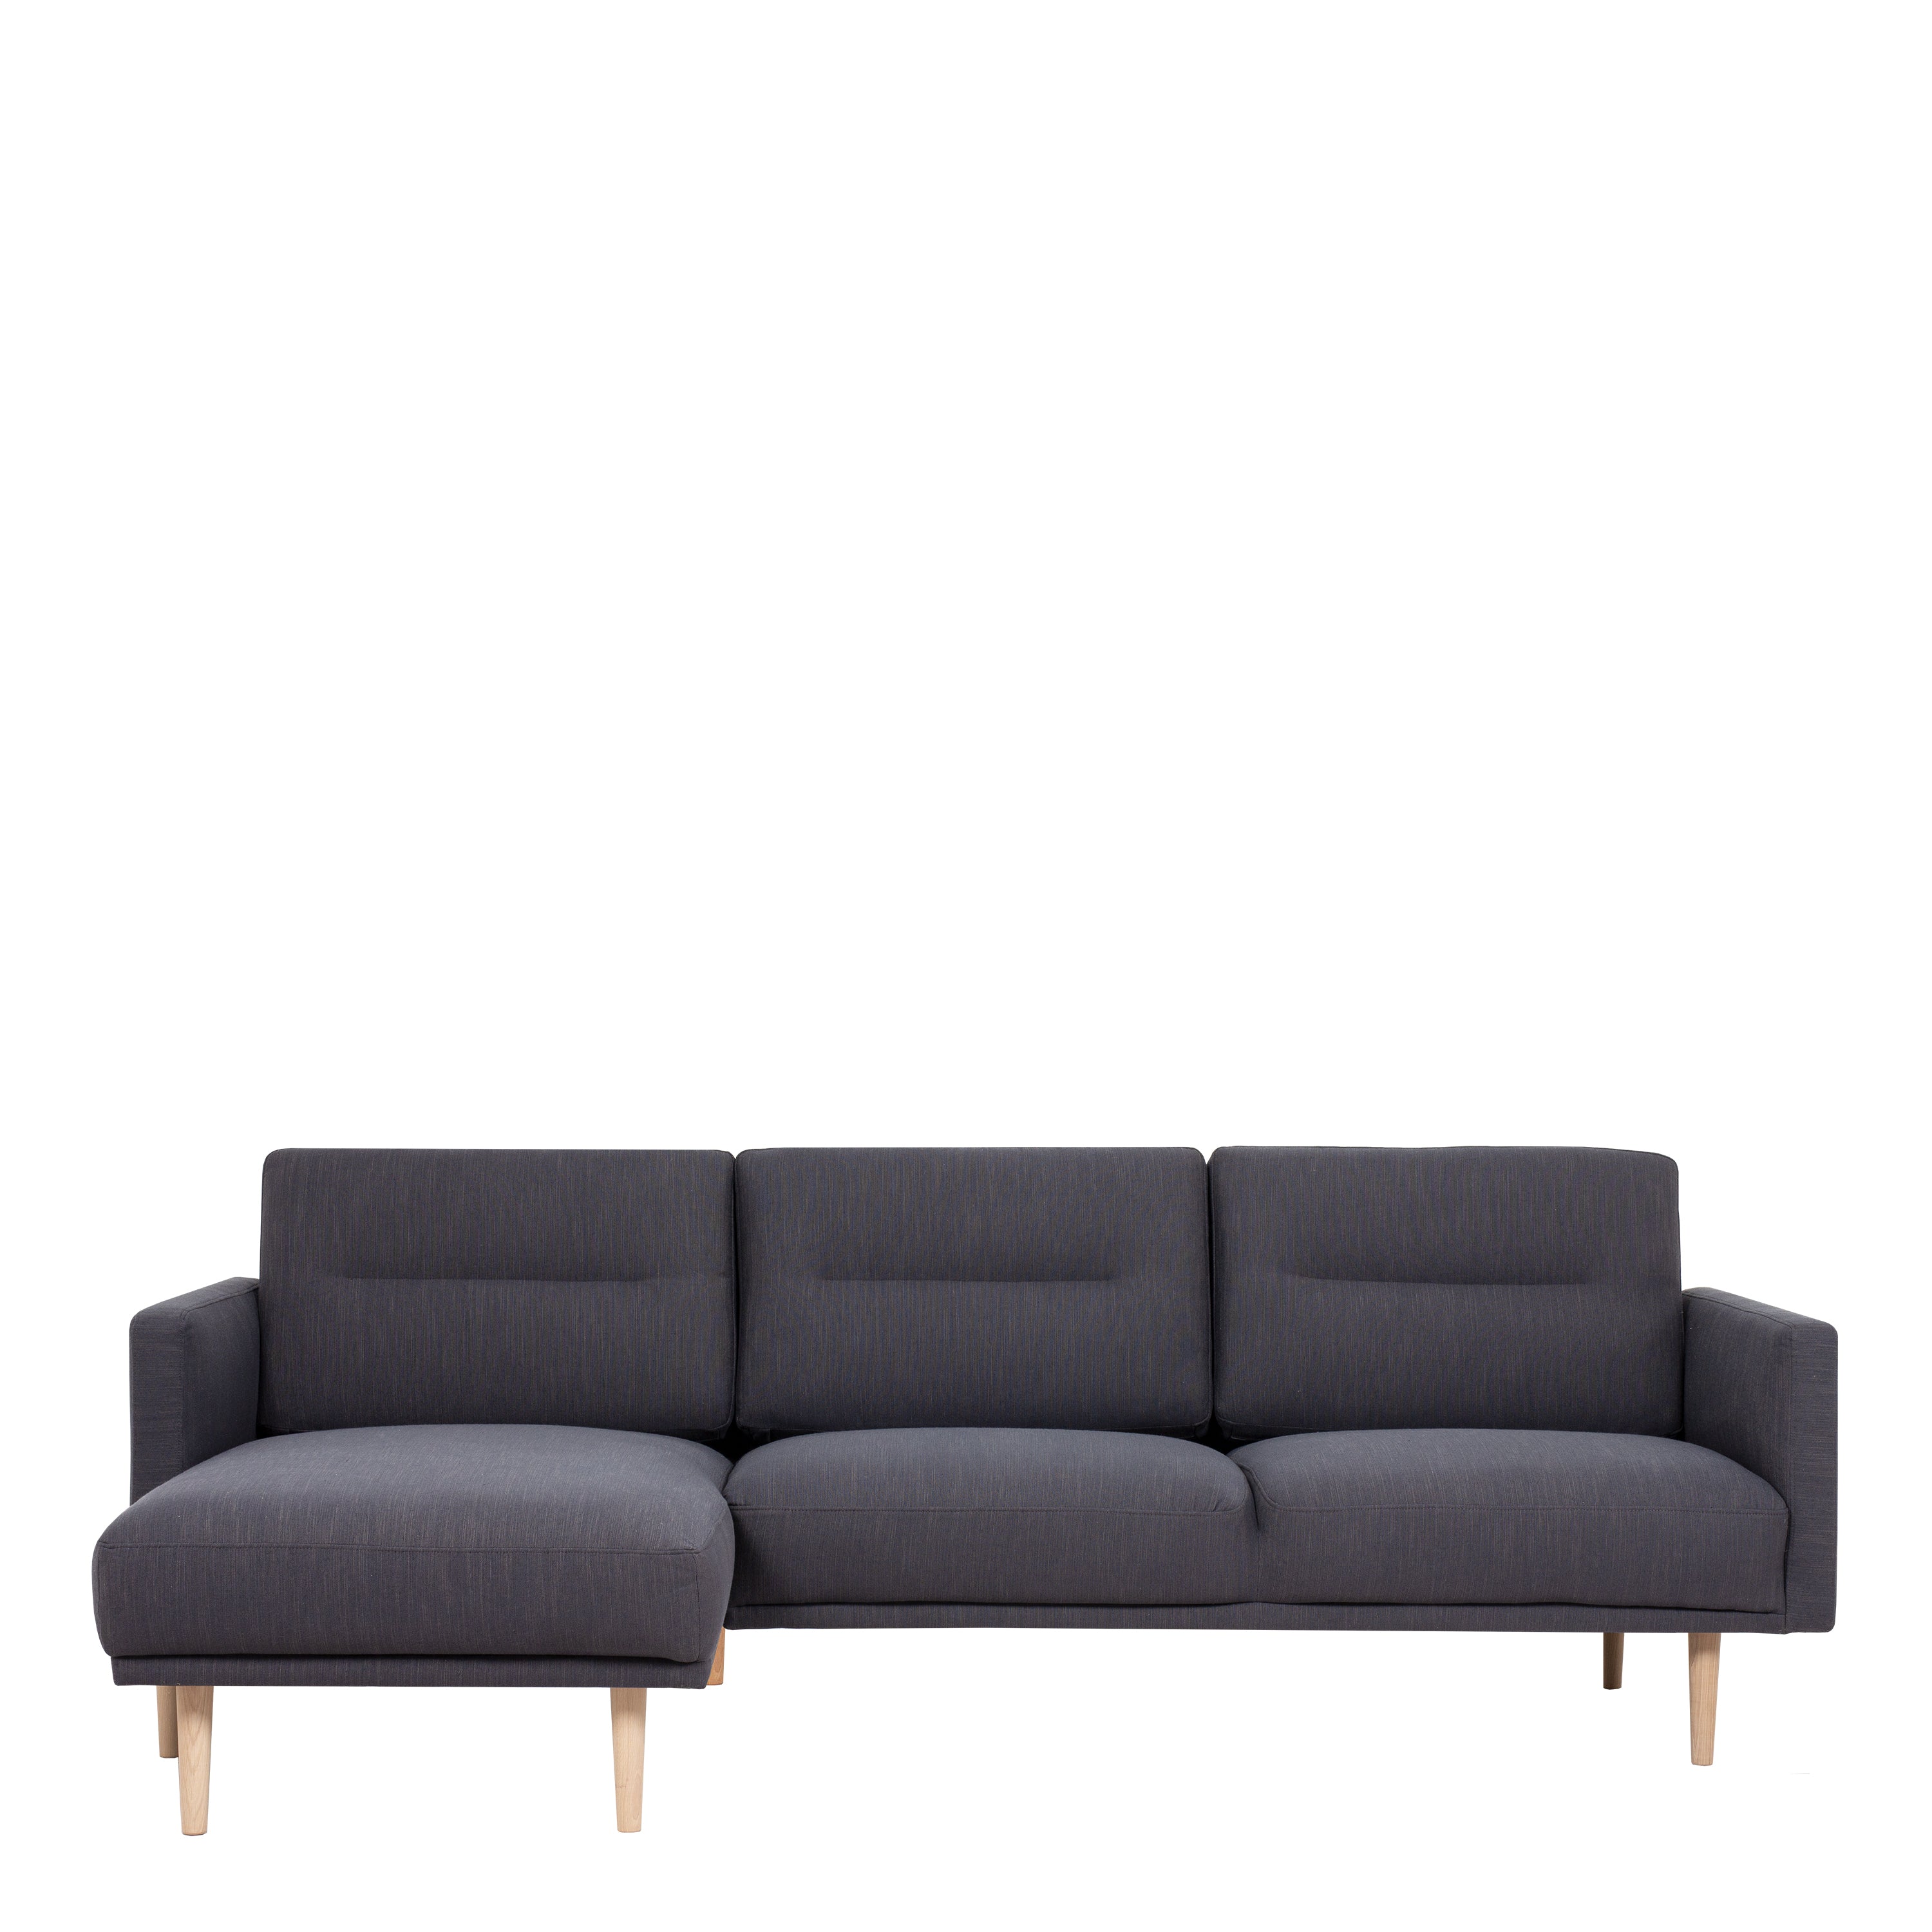 Larvik Chaiselongue Sofa  (LH) - Anthracite, Oak Legs